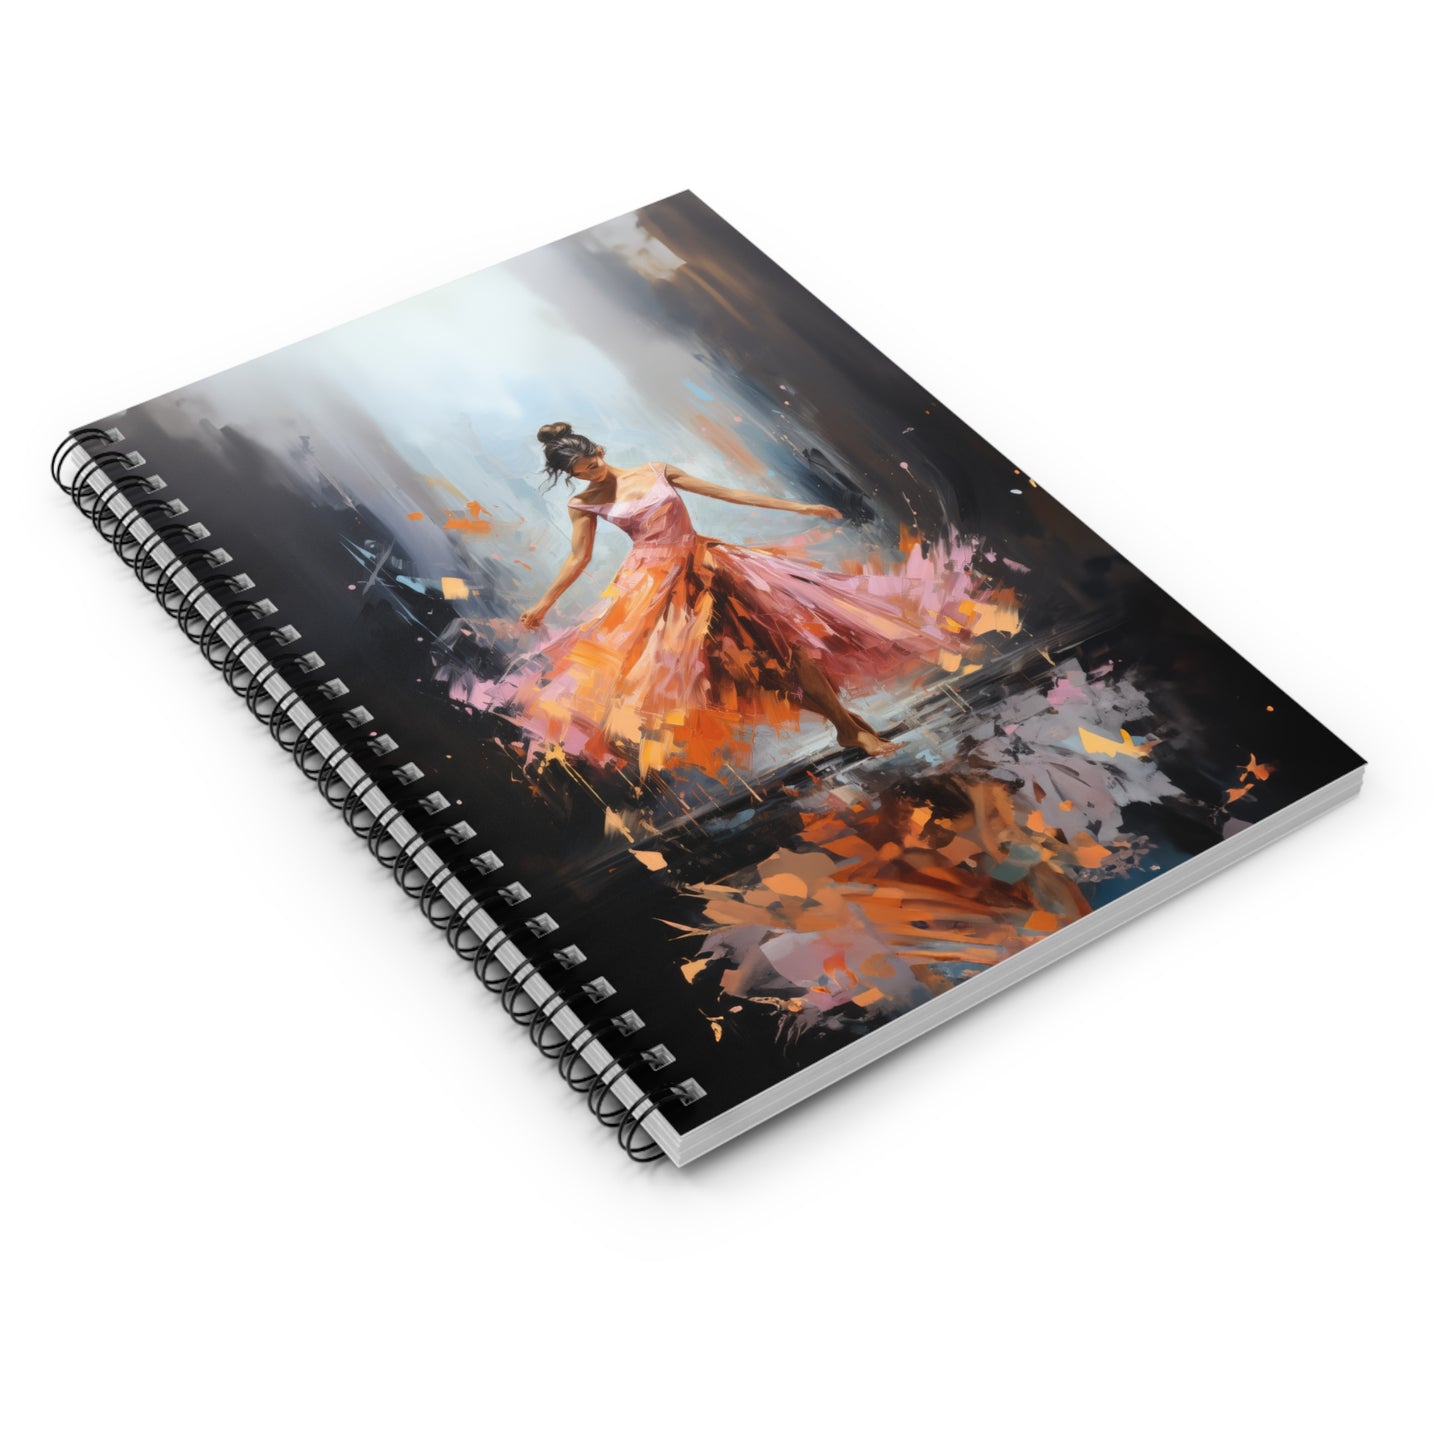 Swirling Splendor: Ballerina in Orange and Pink Dress Dancing Amidst the Reflecting Rain Print - Spiral Notebook Ruled Line 6"x8"